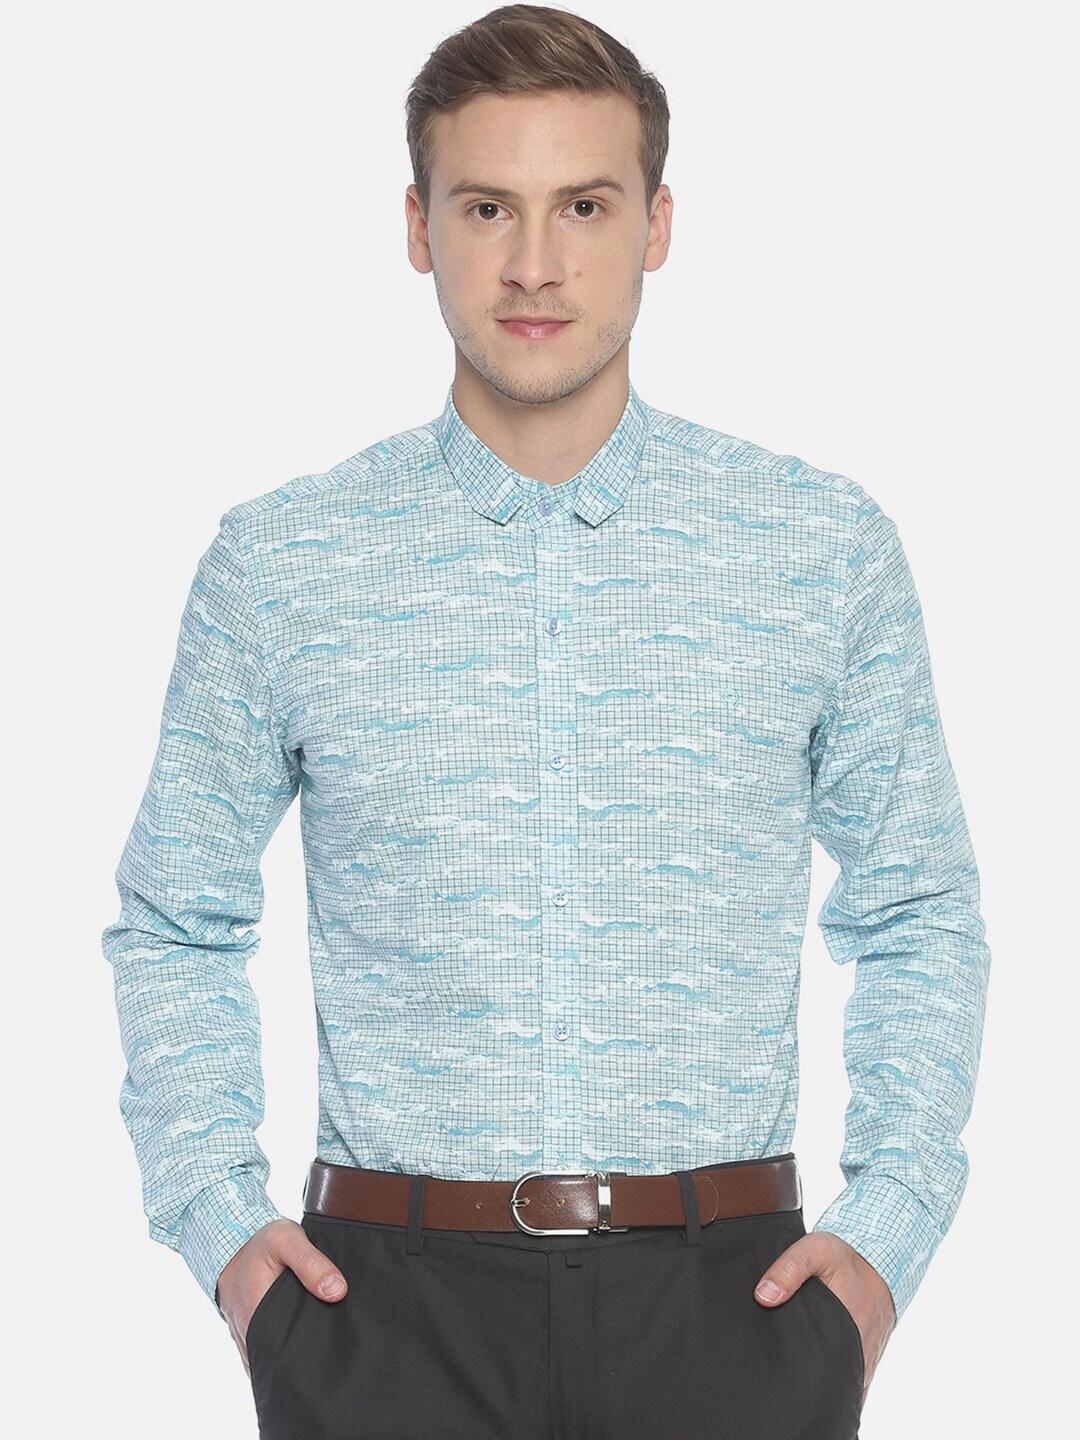 couper-&-coll-men-blue-premium-slim-fit-printed-party-shirt